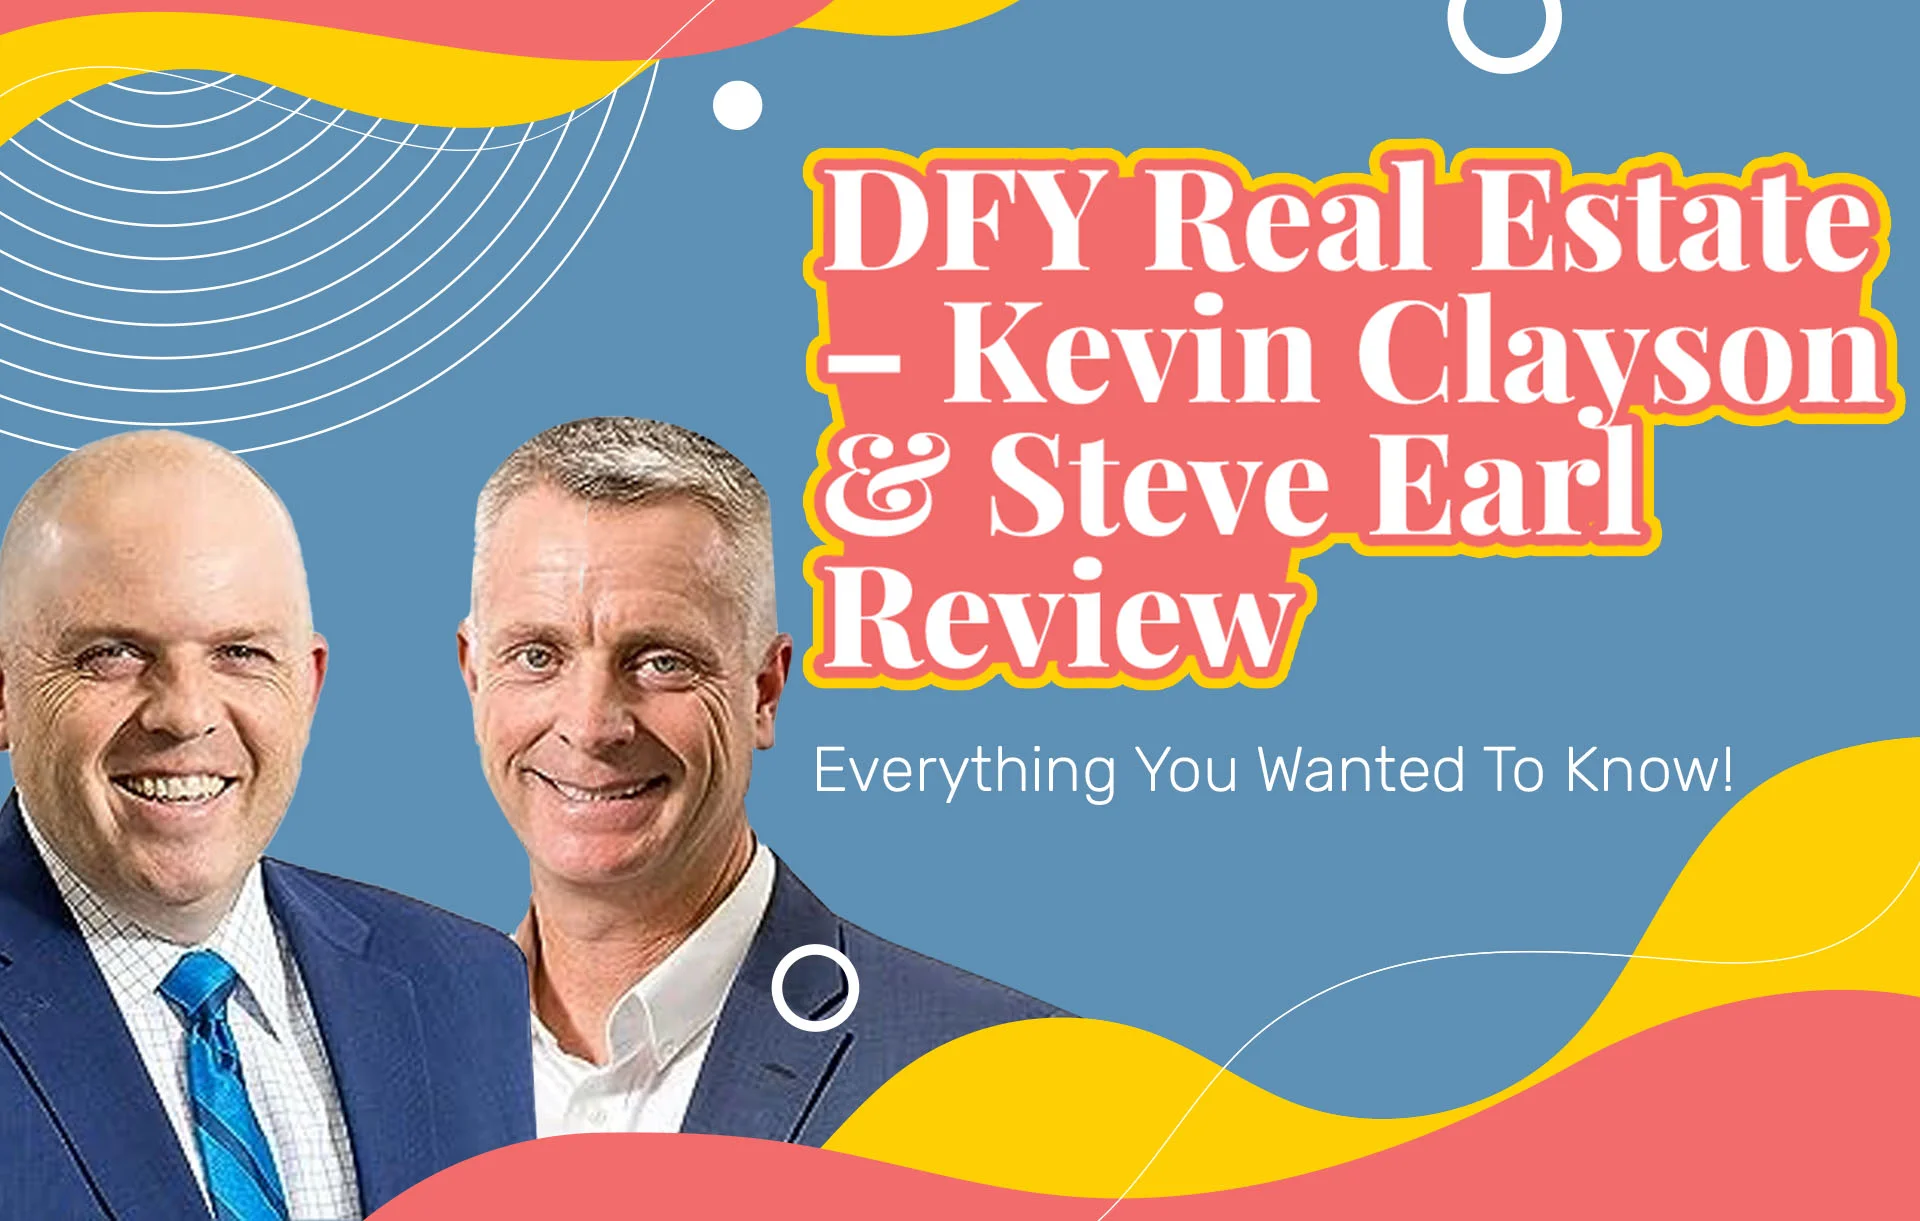 DFY Real Estate Reviews